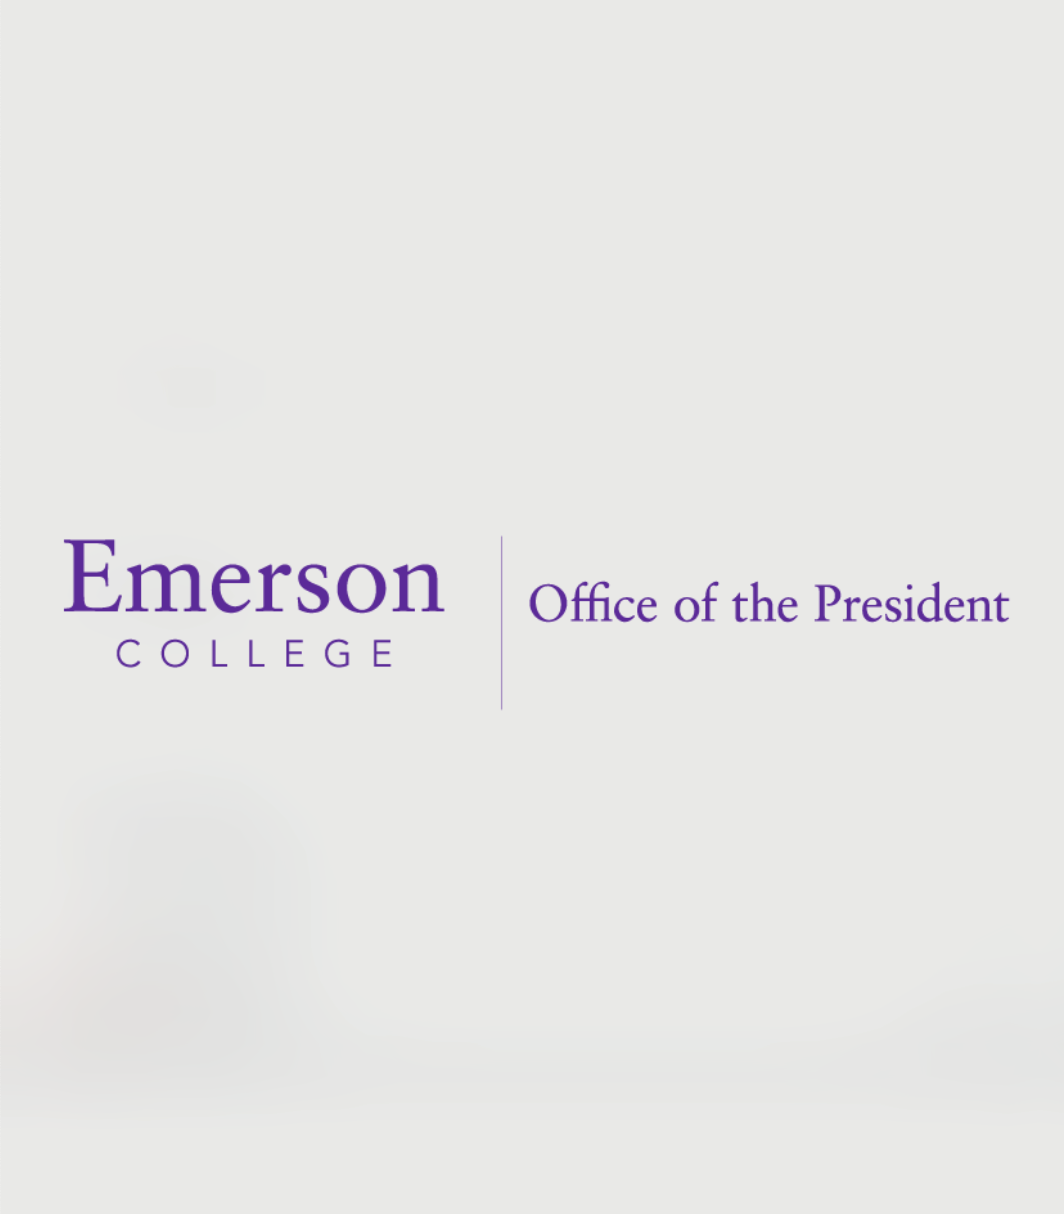 April 16 at 10:02 p.m. - Bernhardt provides update to Emerson community